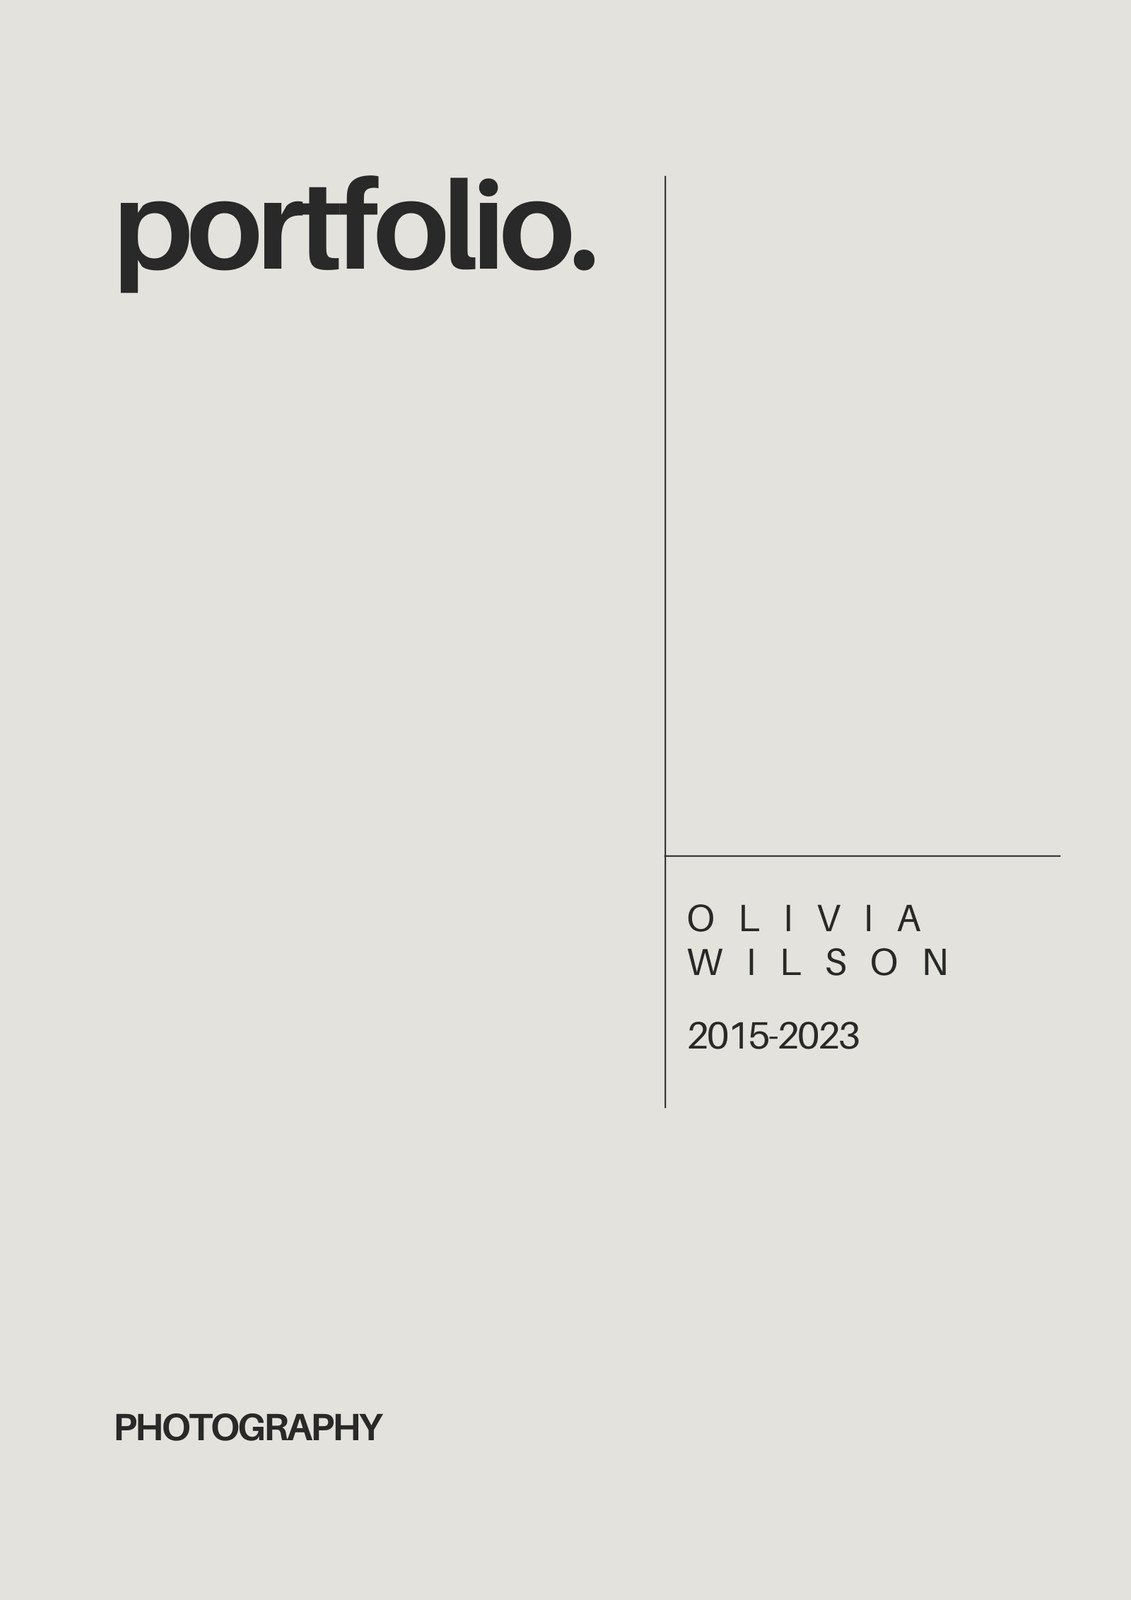 career portfolio cover page template